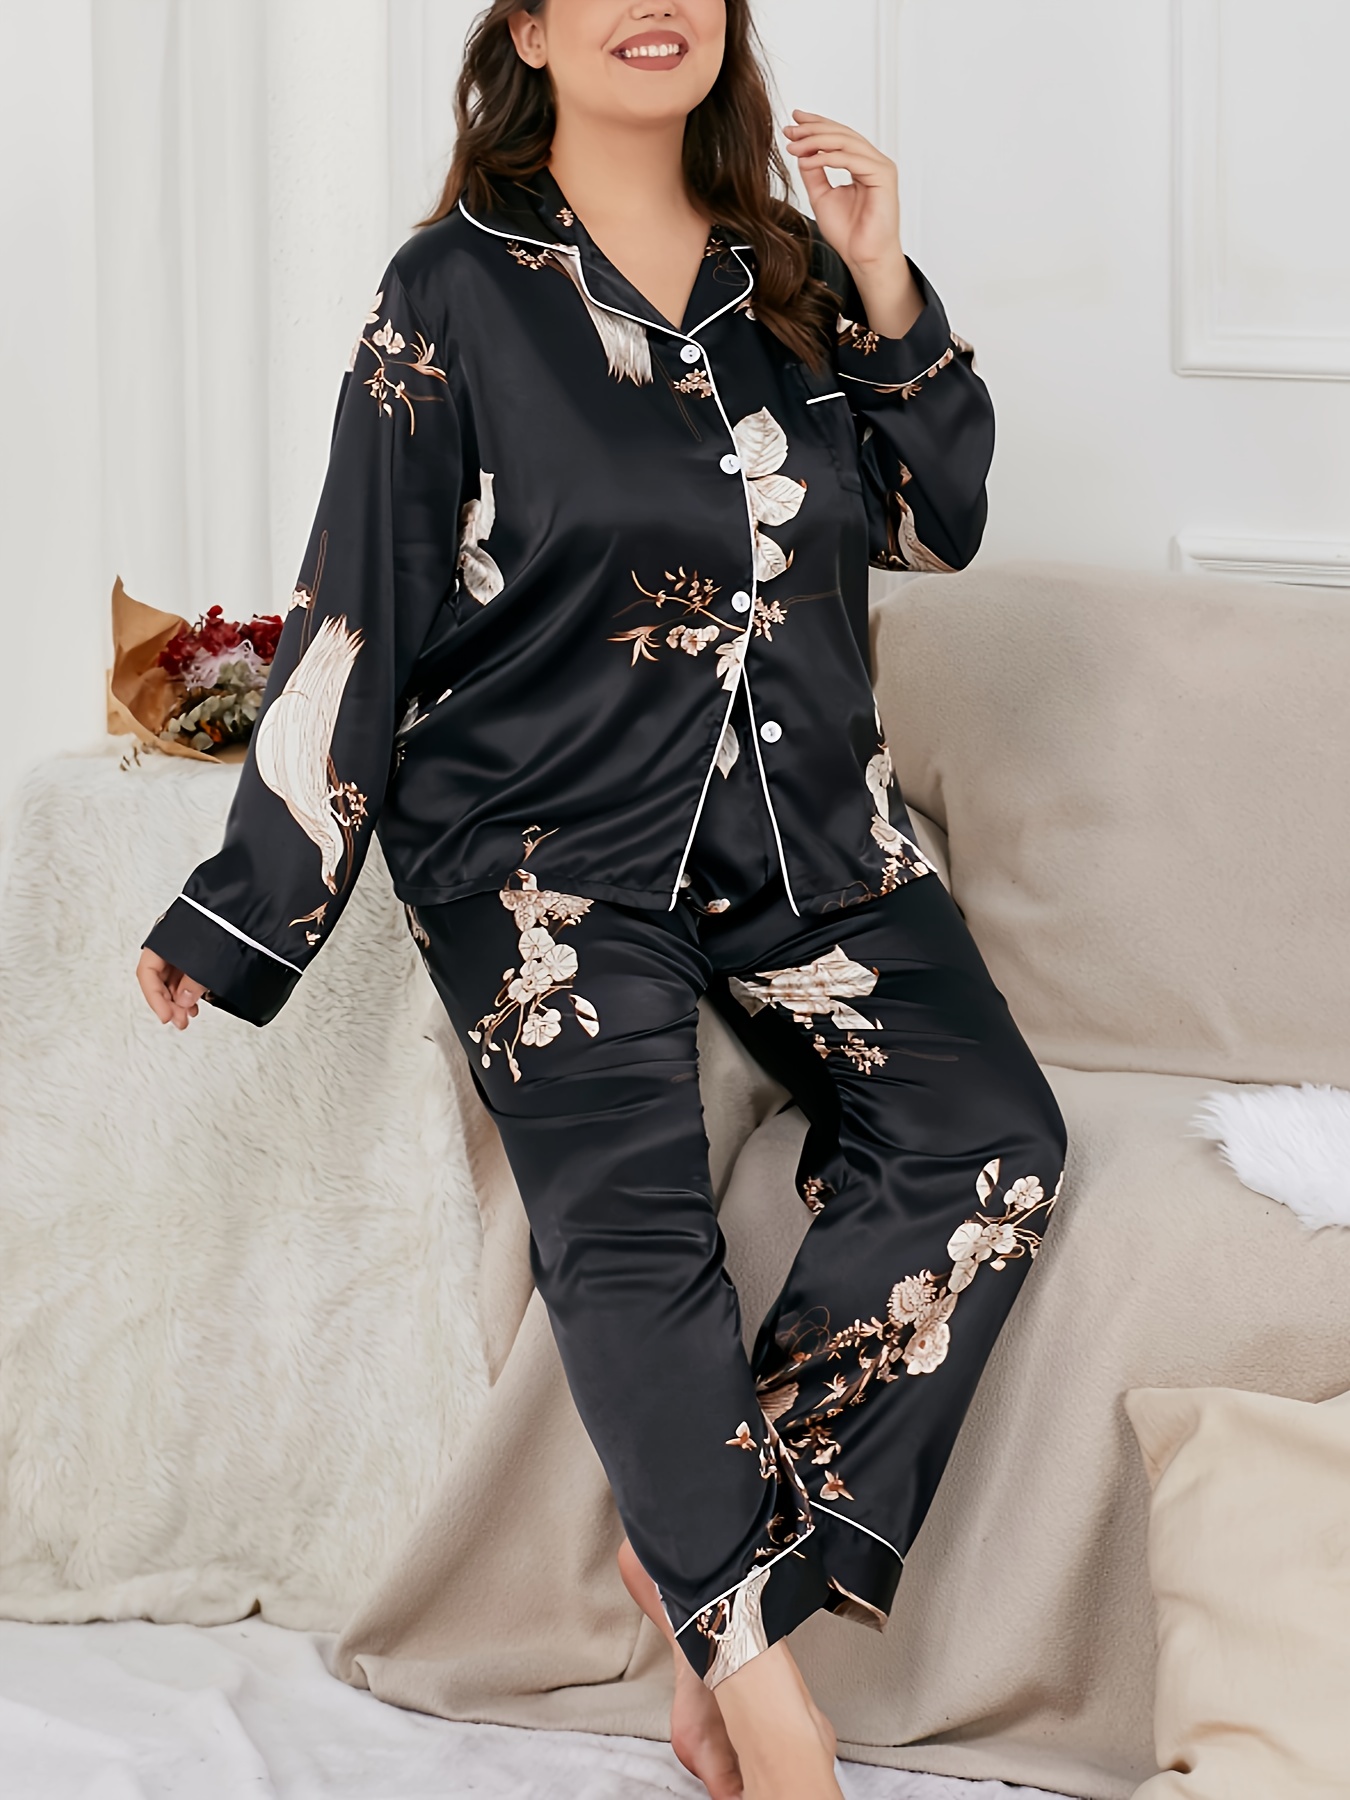 Women's Plaid Pajama Set - Cute Sleepwear, Soft Pyjamas, Full-Sleeve  Princess Lace Homewear, Plus Size Women's Fashion Sleepwear